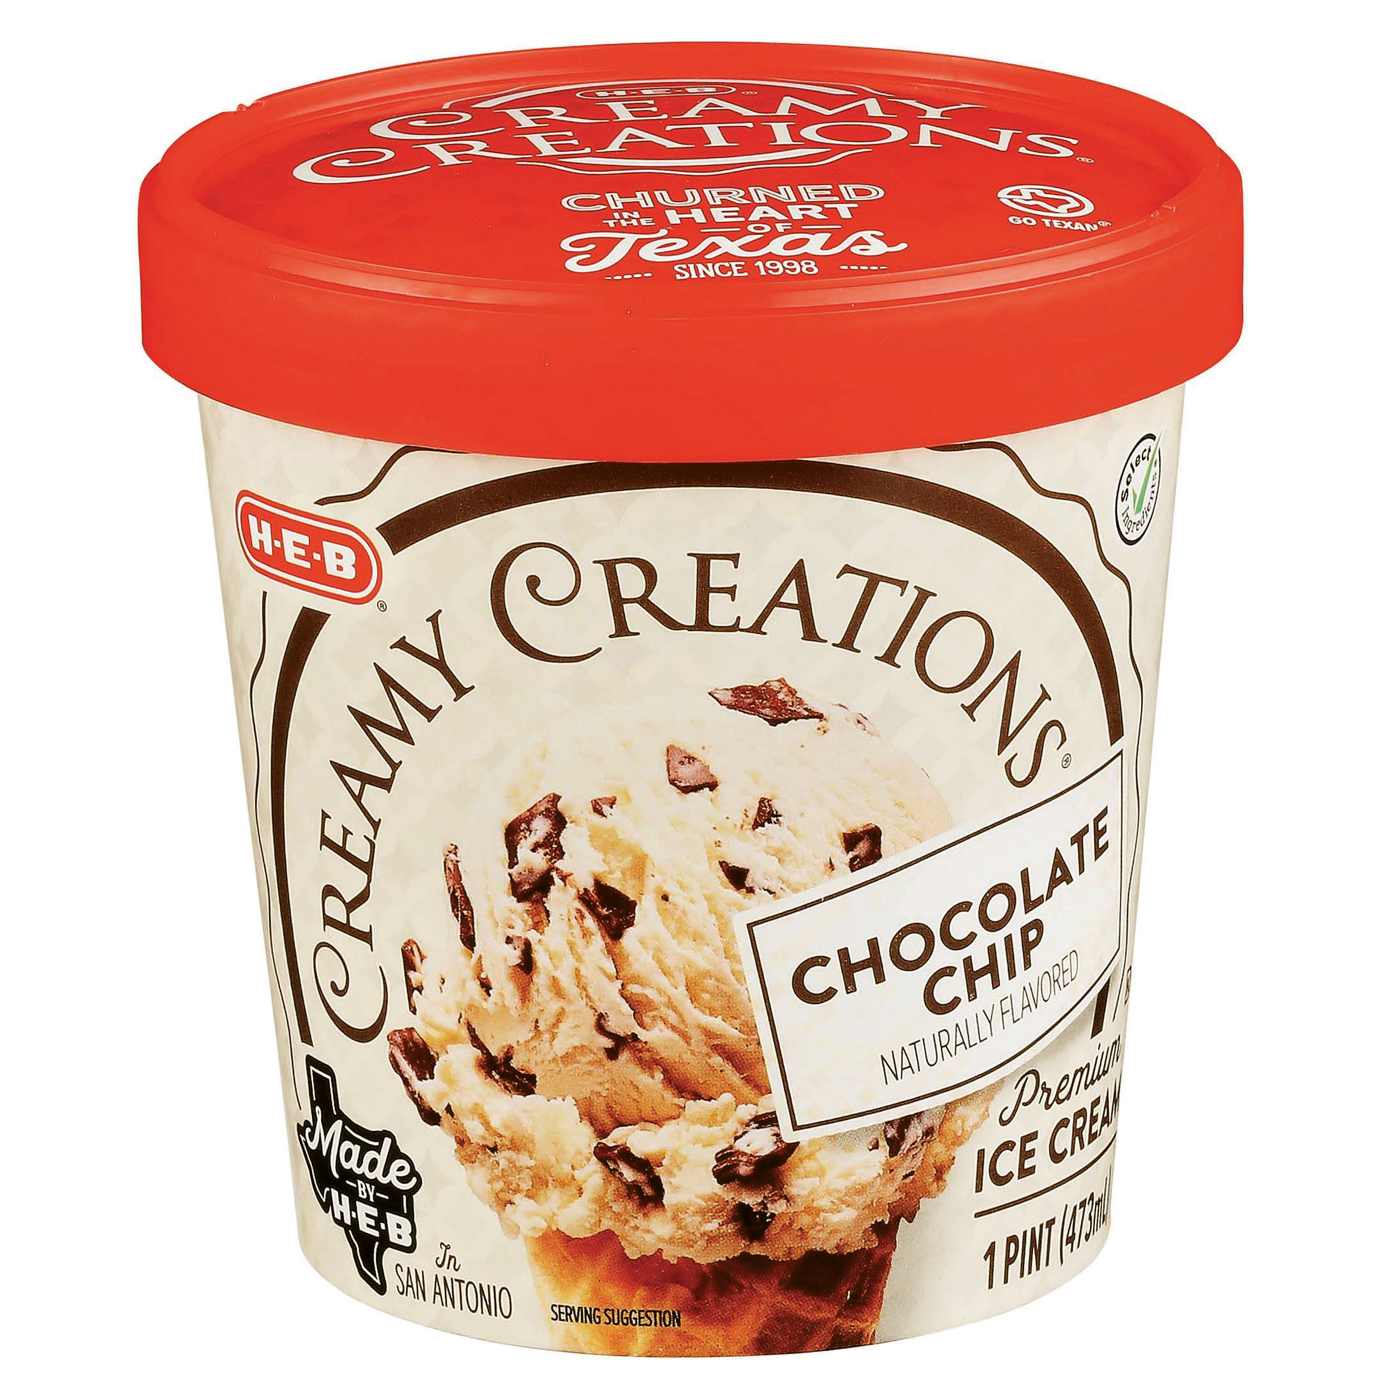 H-E-B Creamy Creations Chocolate Chip Ice Cream; image 1 of 2